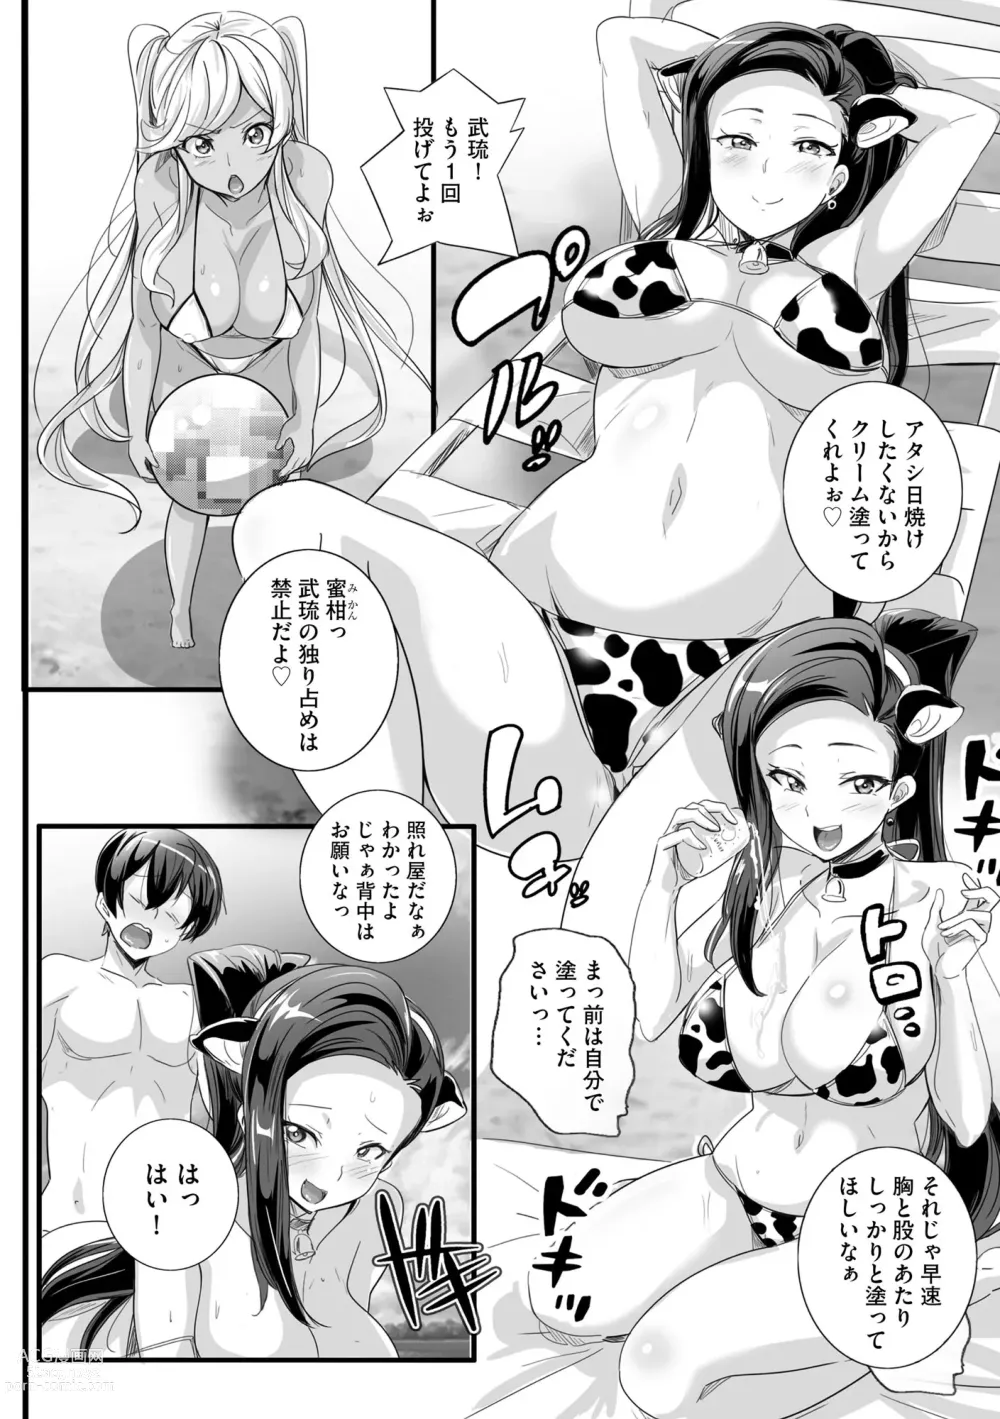 Page 10 of manga Cyberia Plus Vol. 13